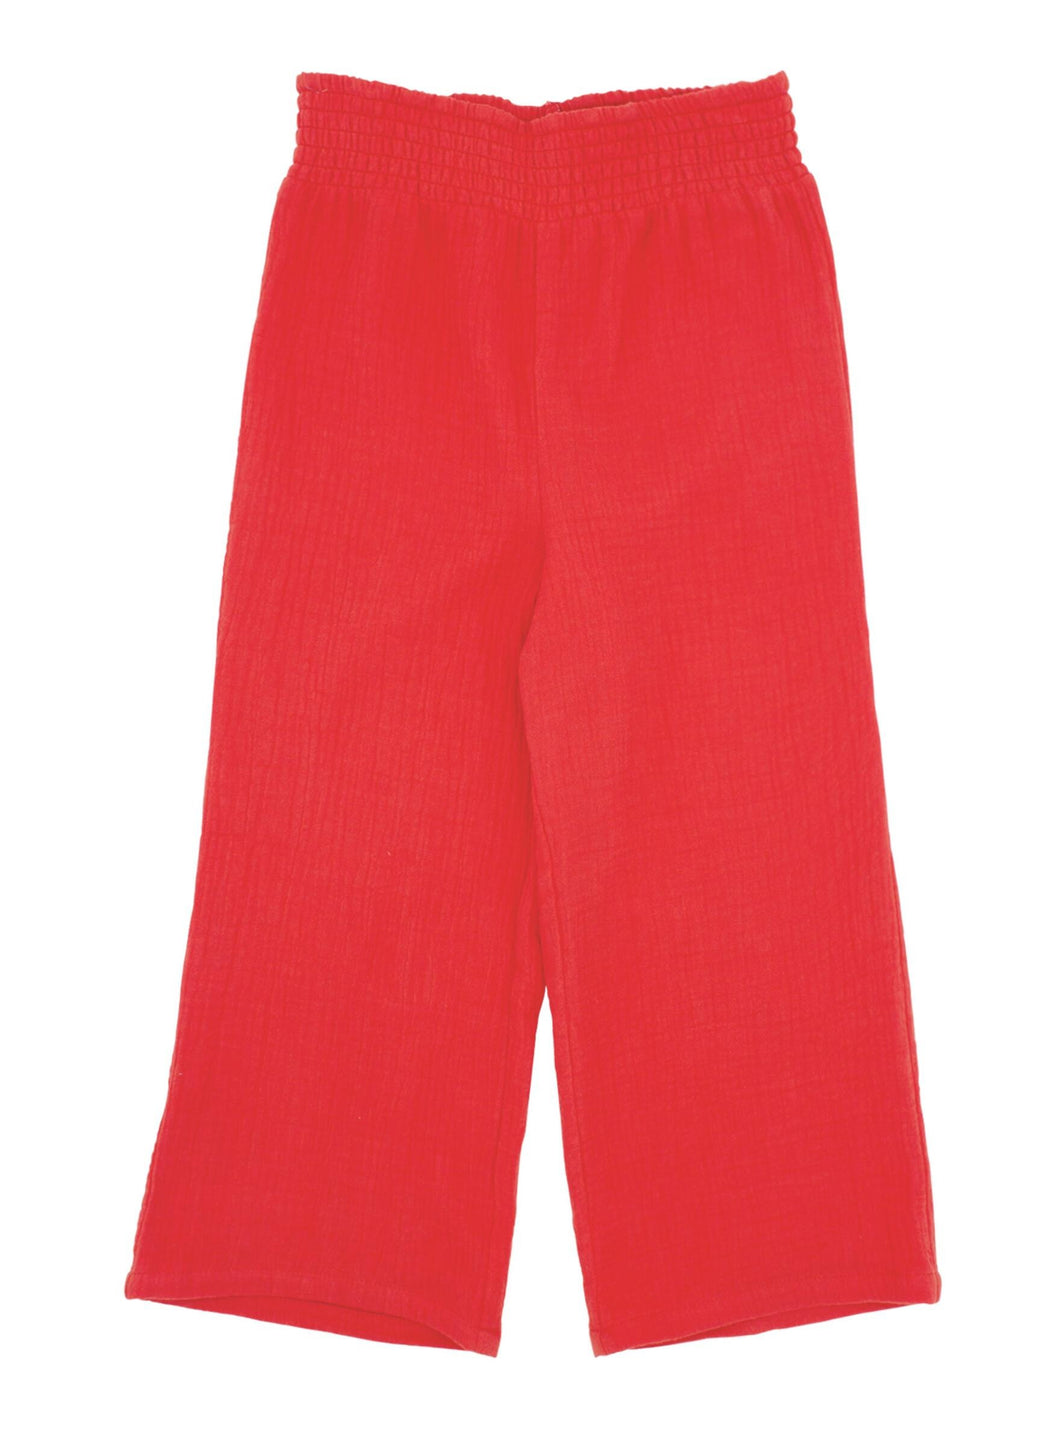 4yrs - Playa Pant in Scarlet Red